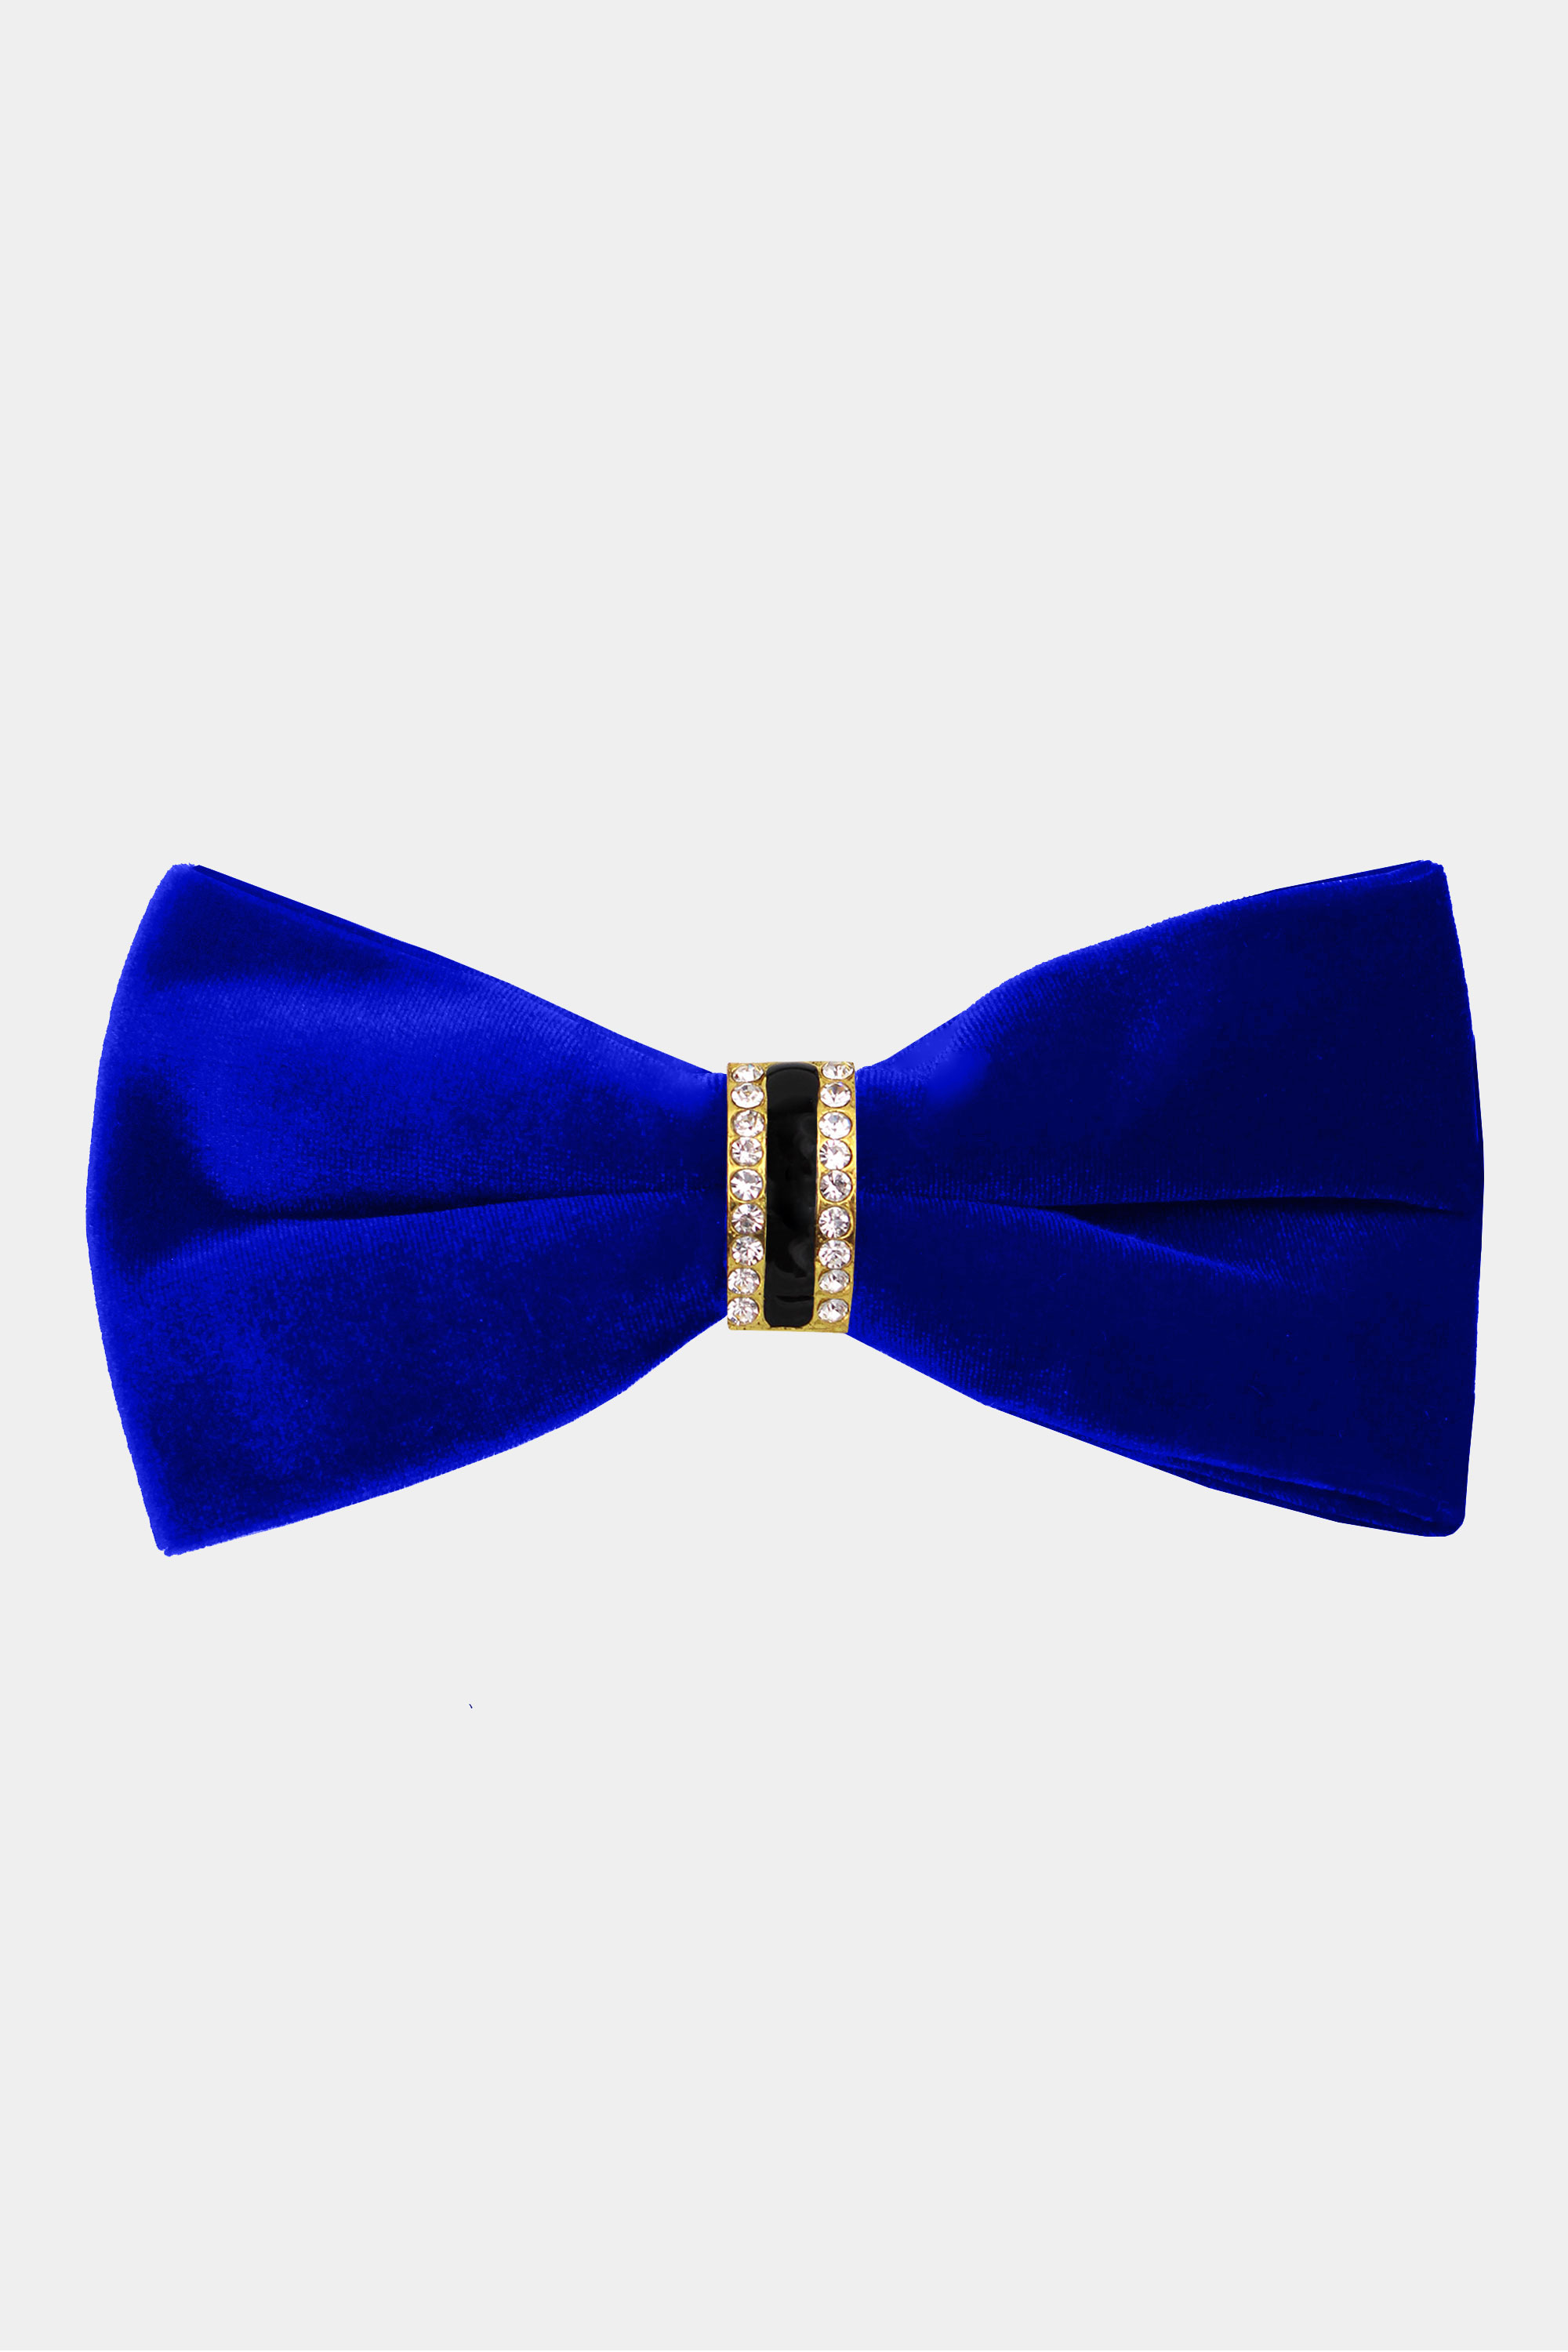 Crystal Royal Blue Velvet Bow Tie